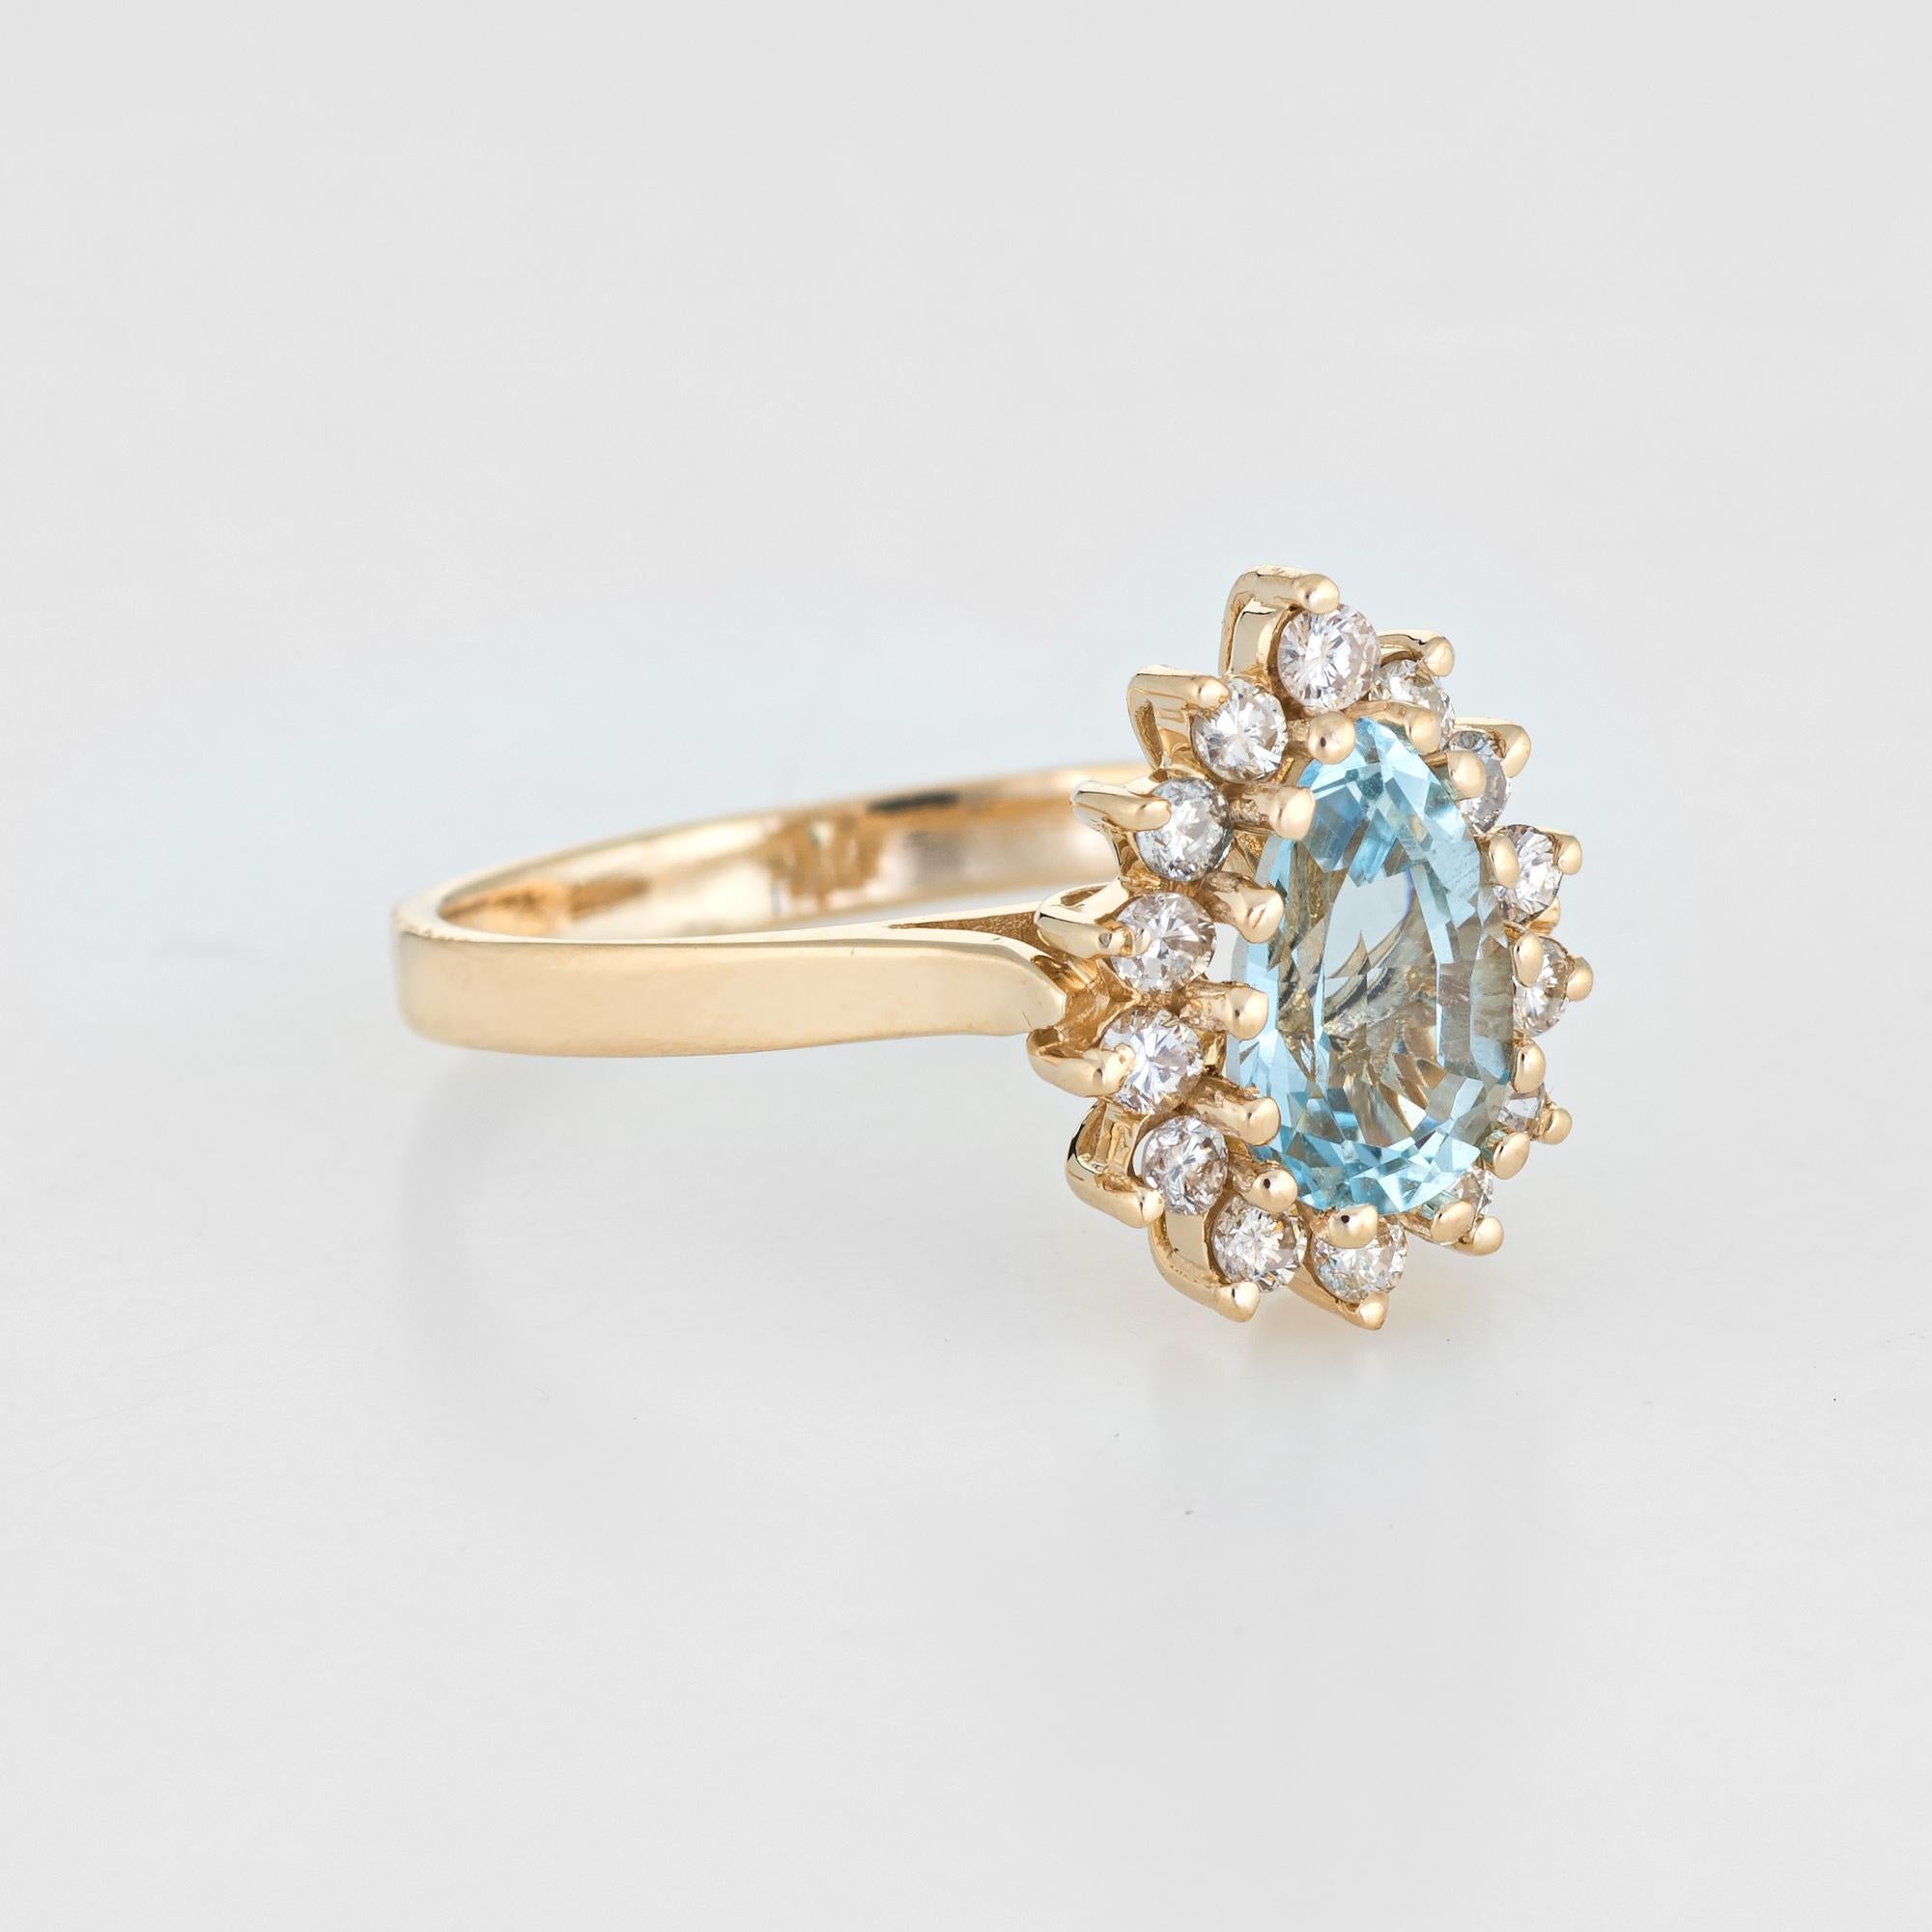 Modern Pear Cut Aquamarine Diamond Ring Cocktail Vintage 14 Karat Yellow Gold Jewelry